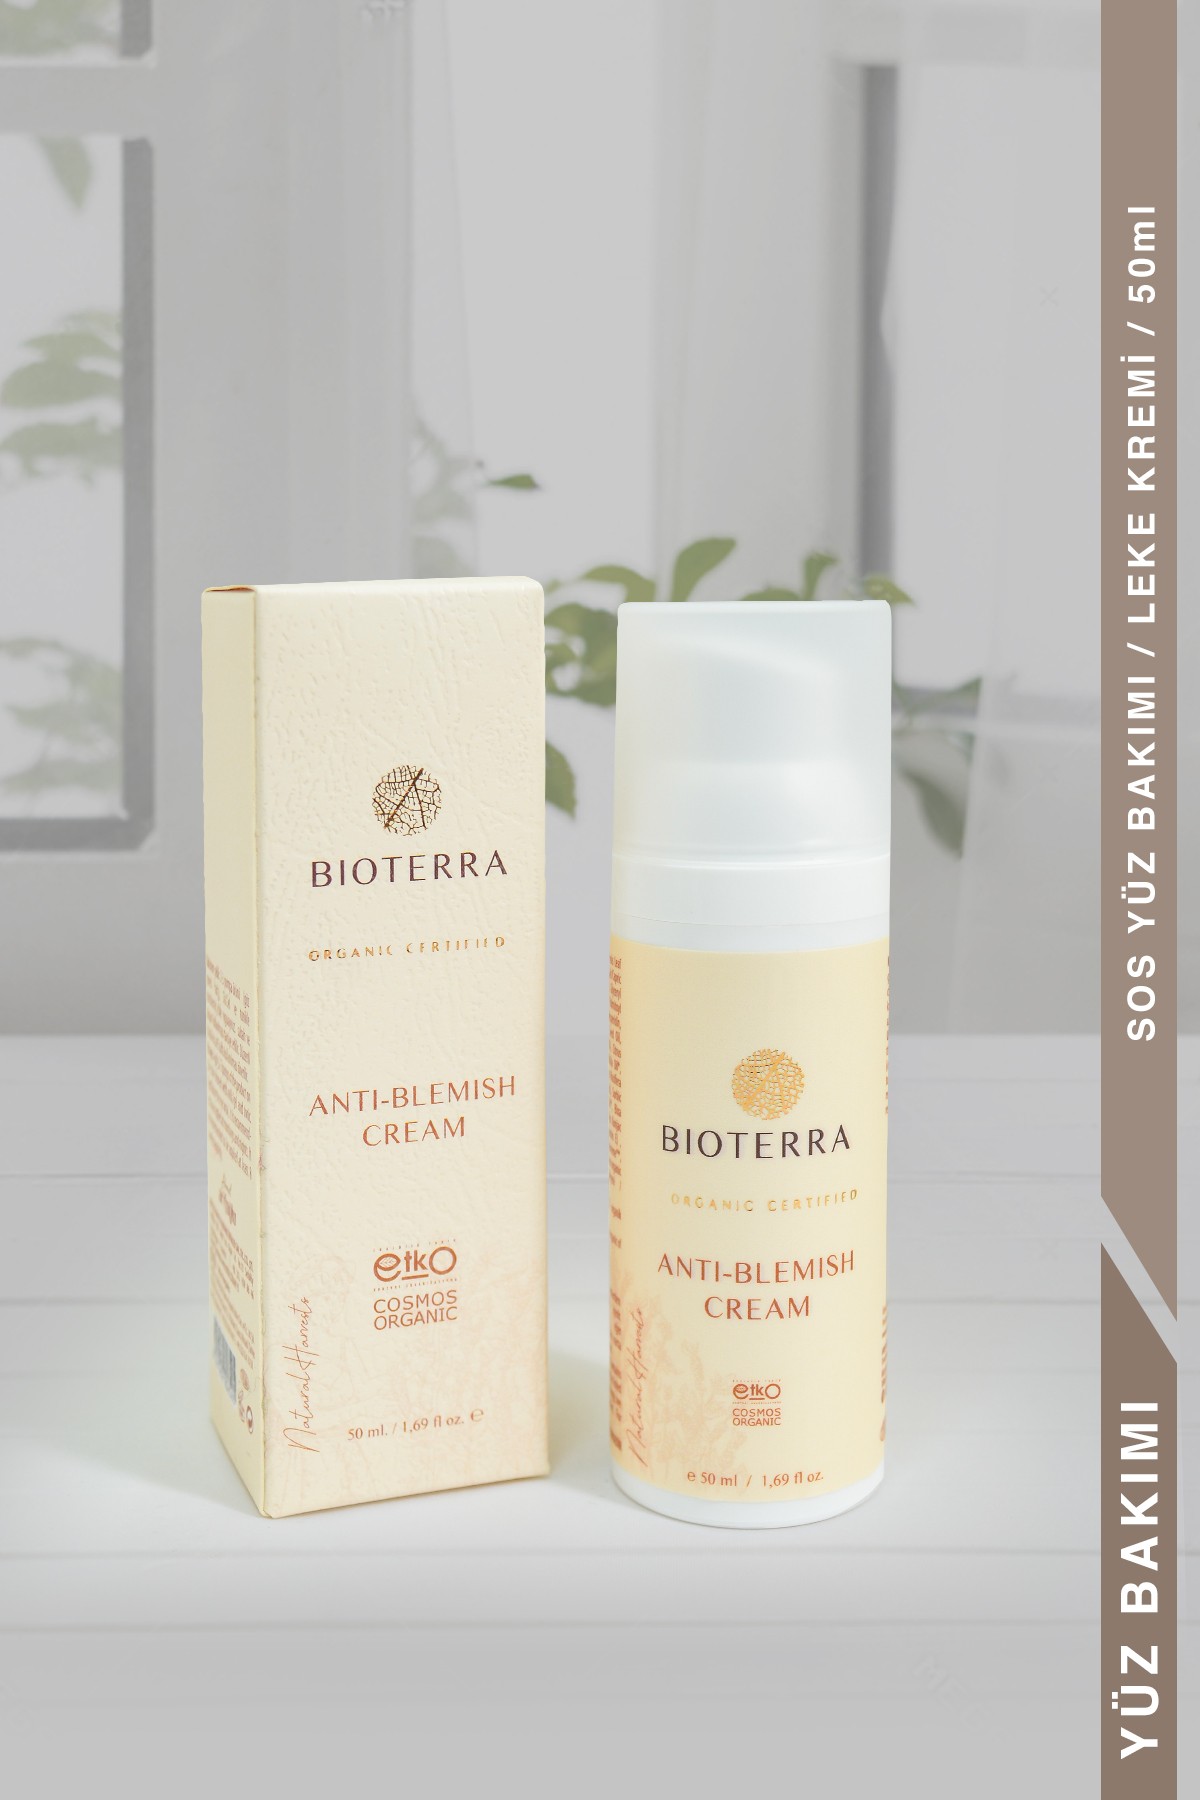 Anti Blemish Cream, Bioterra Organic Cream 50 ml, Natural product 